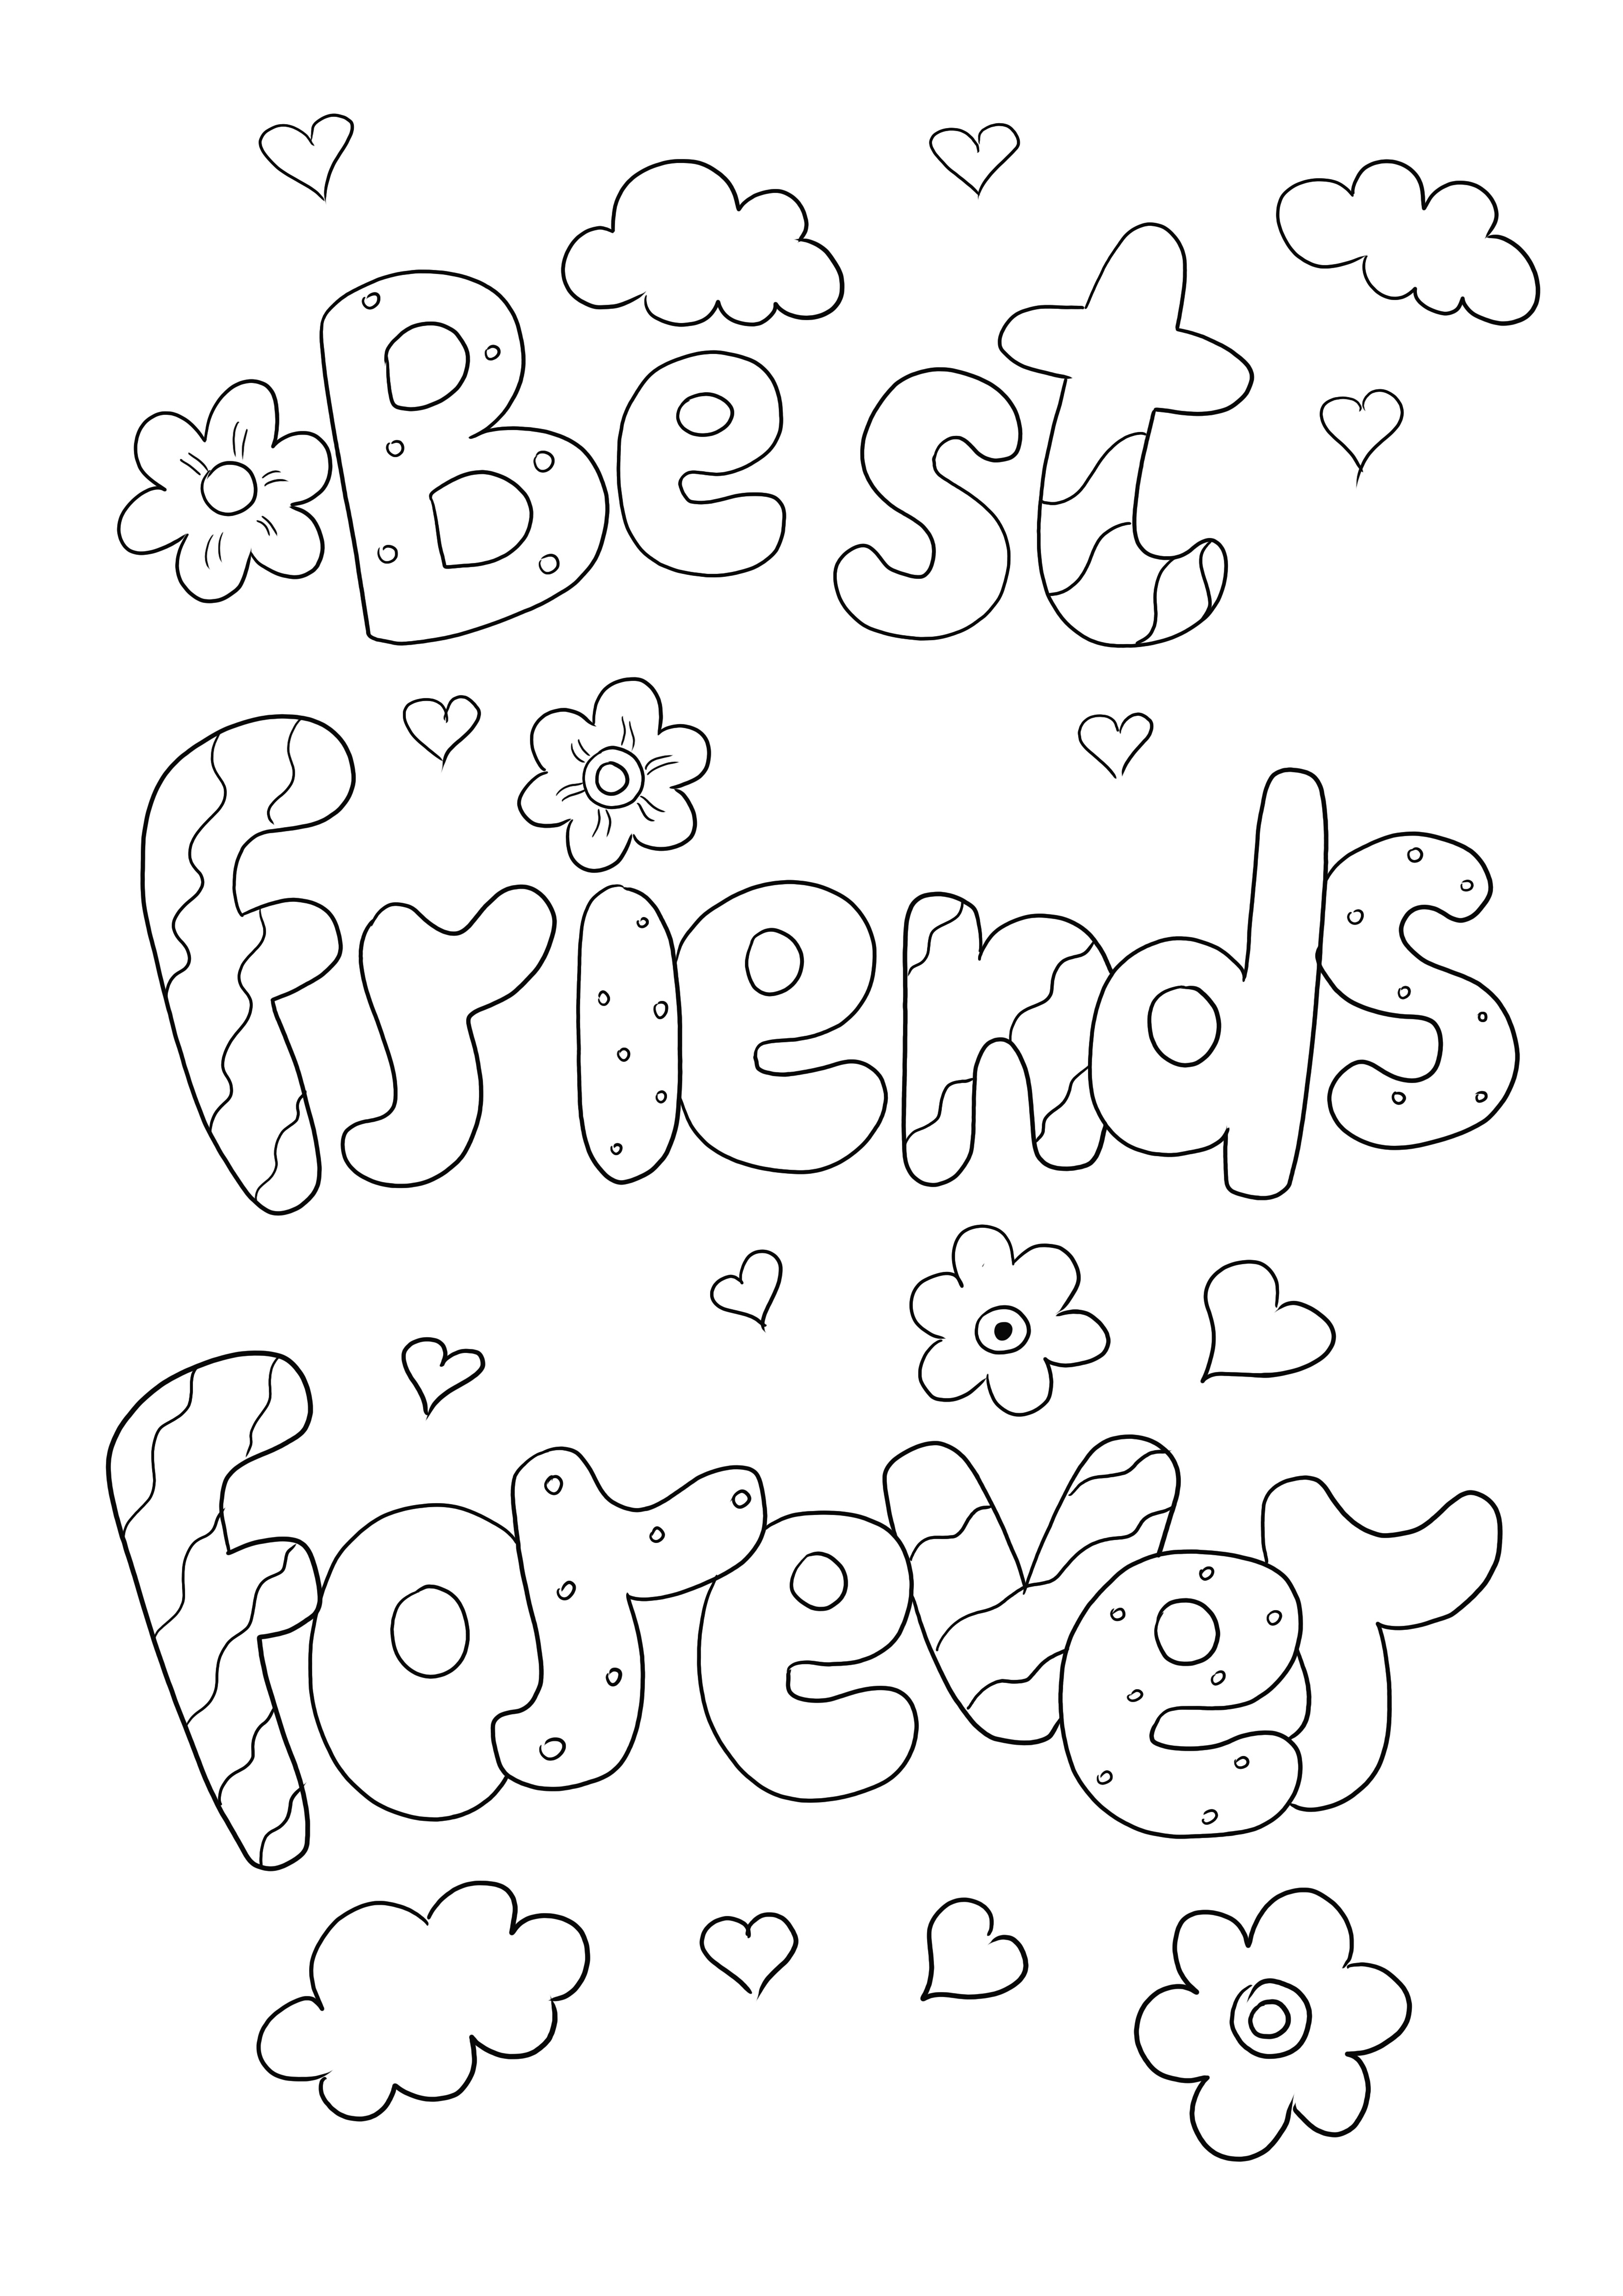 Imagen para colorear de Best Friends Forever para descargar o imprimir gratis